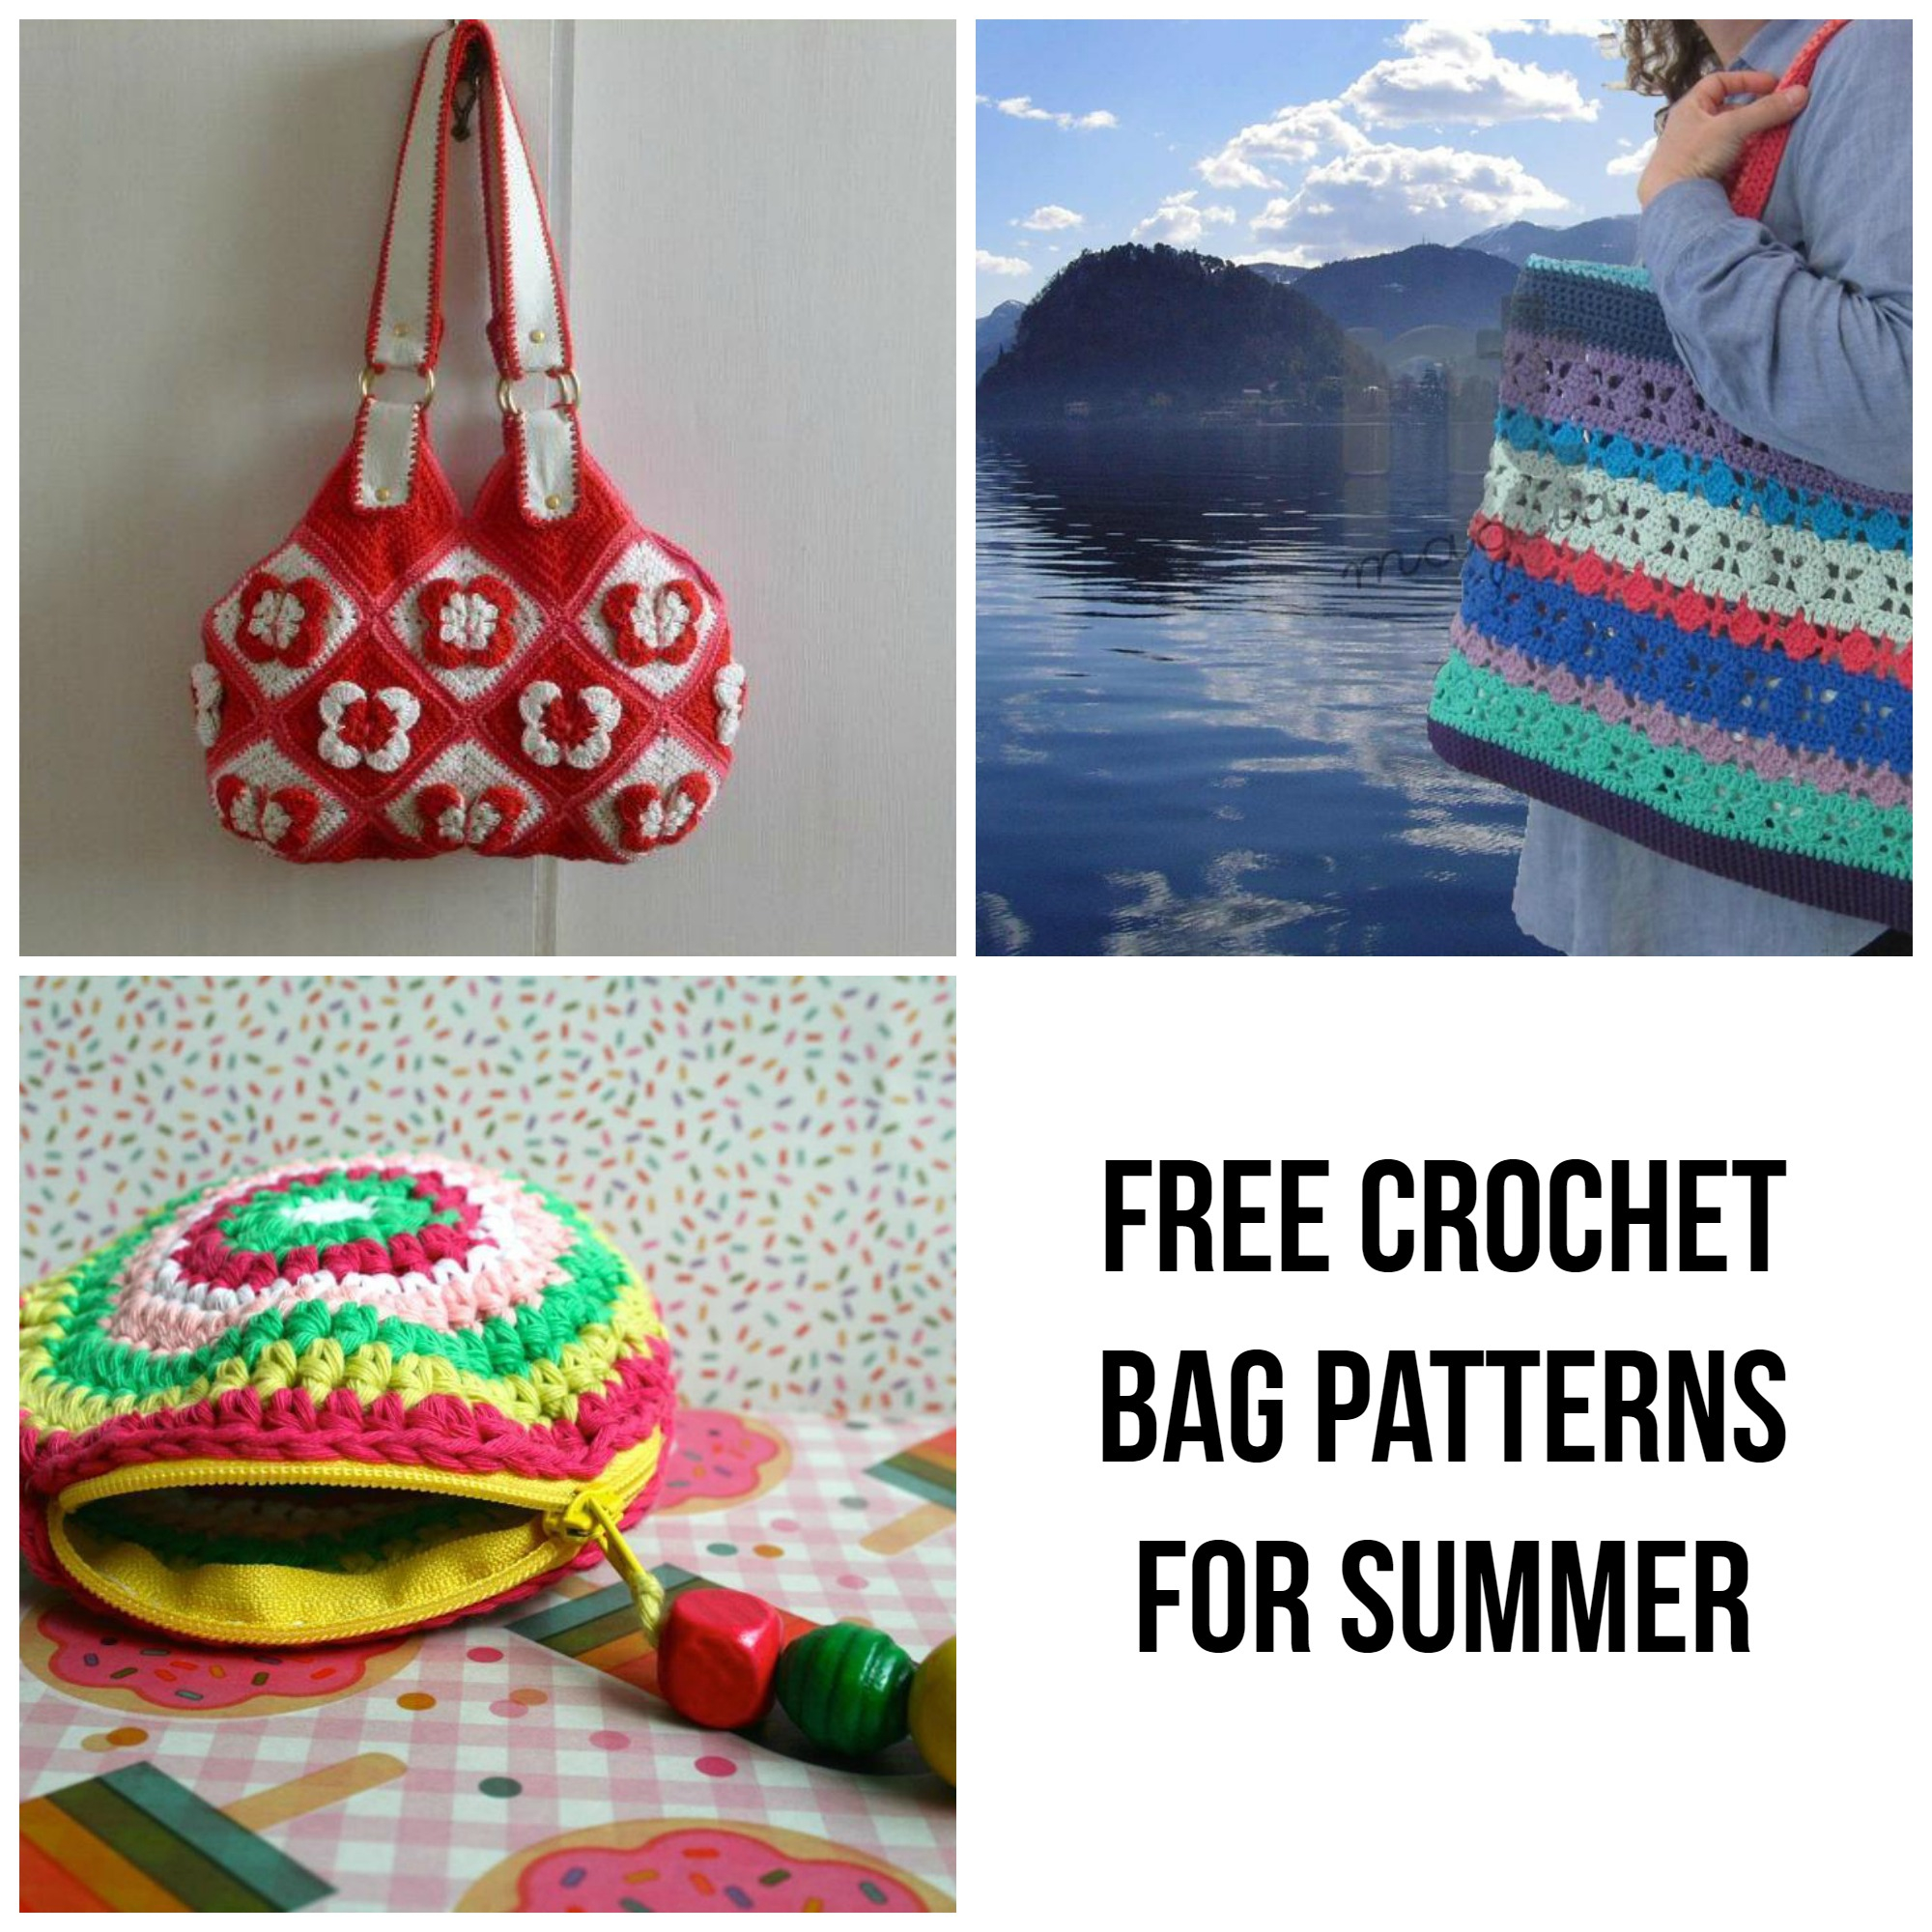 Designer Crochet Bag Patterns 8 Free Crochet Bag Patterns For Summer